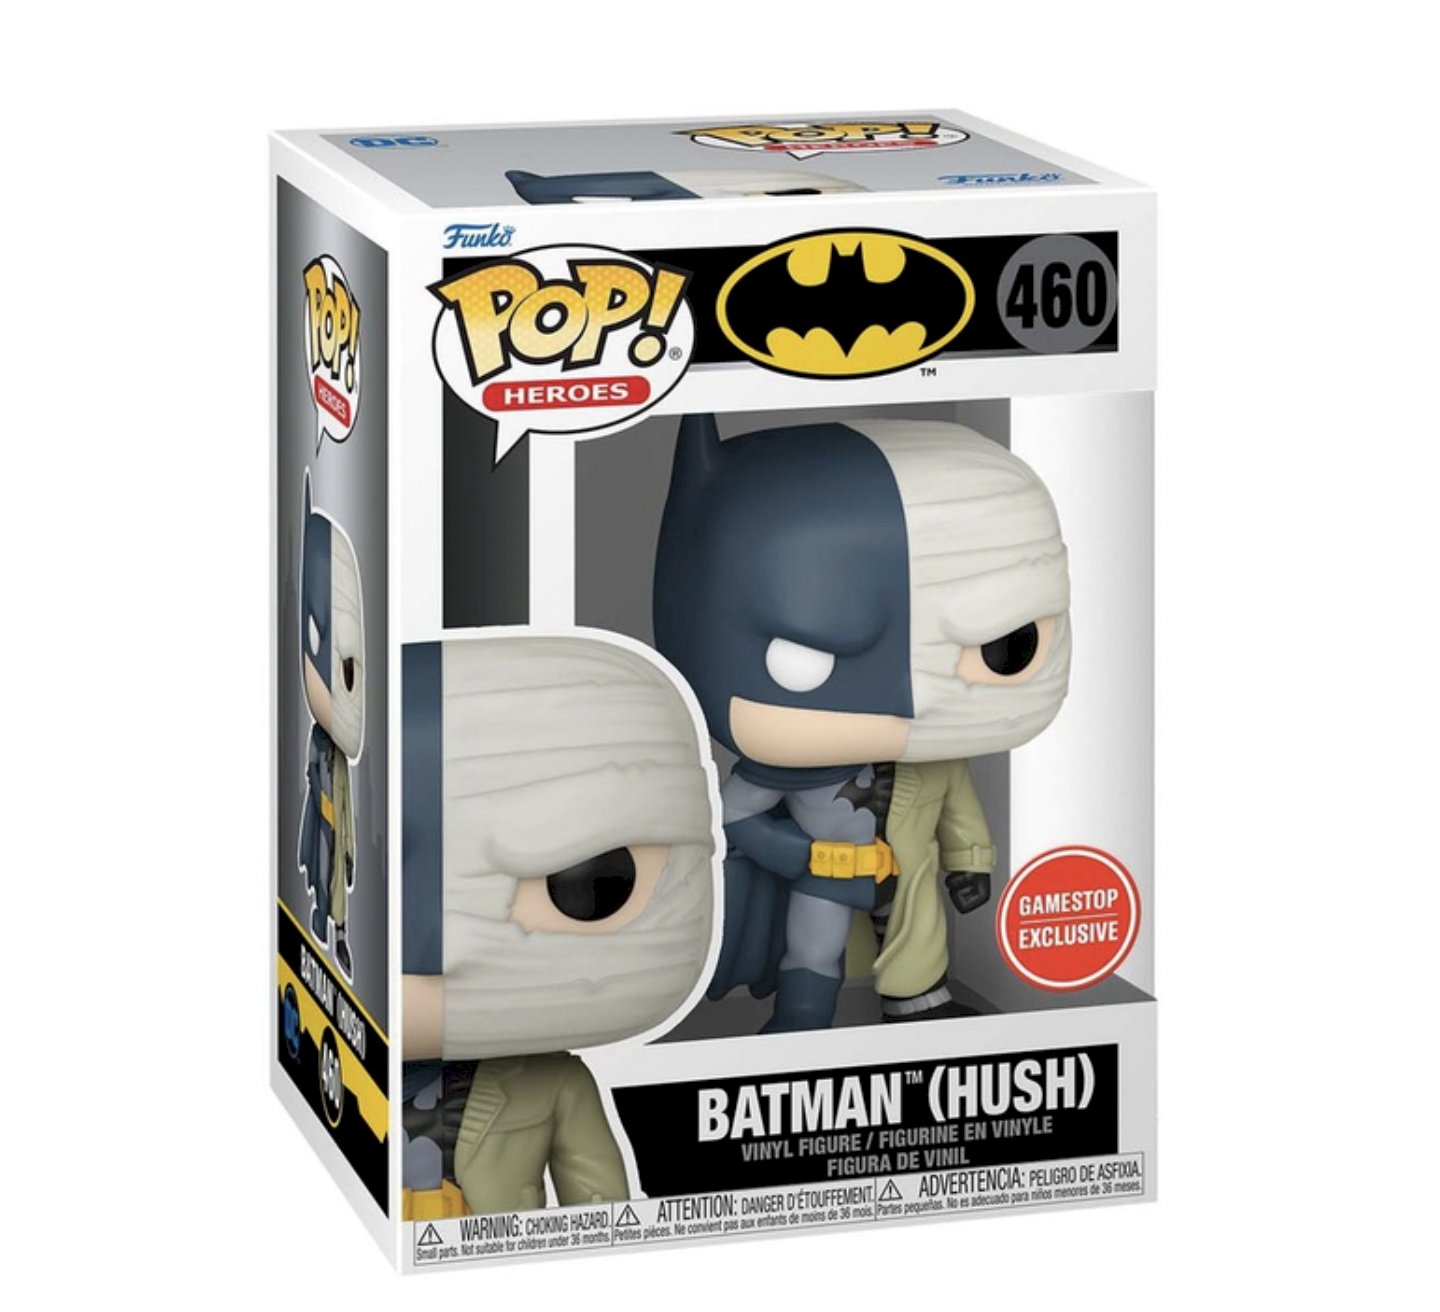 #460 DC: Batman (Hush) Gamestop Exclusive